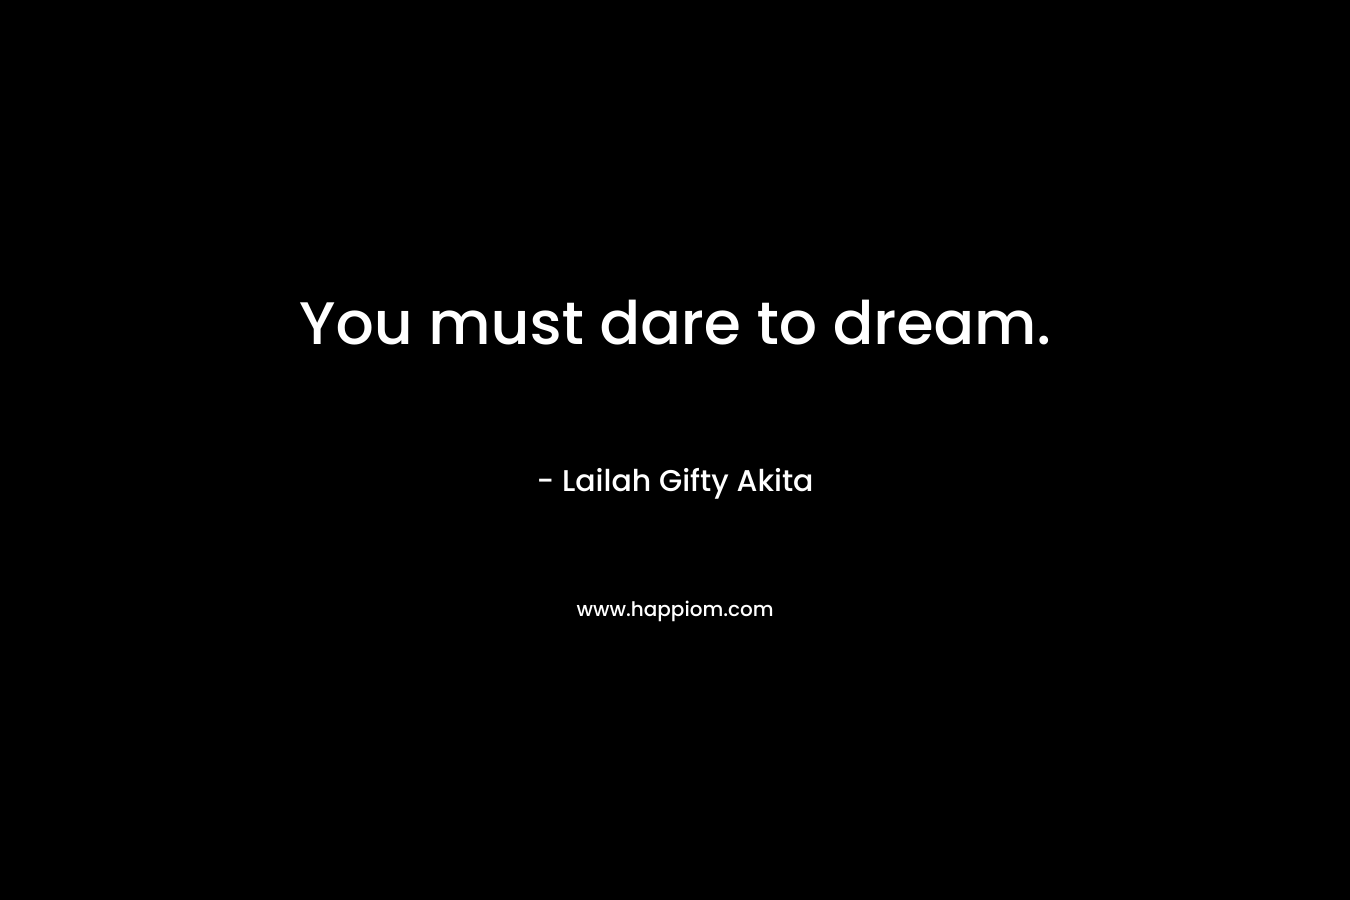 You must dare to dream.